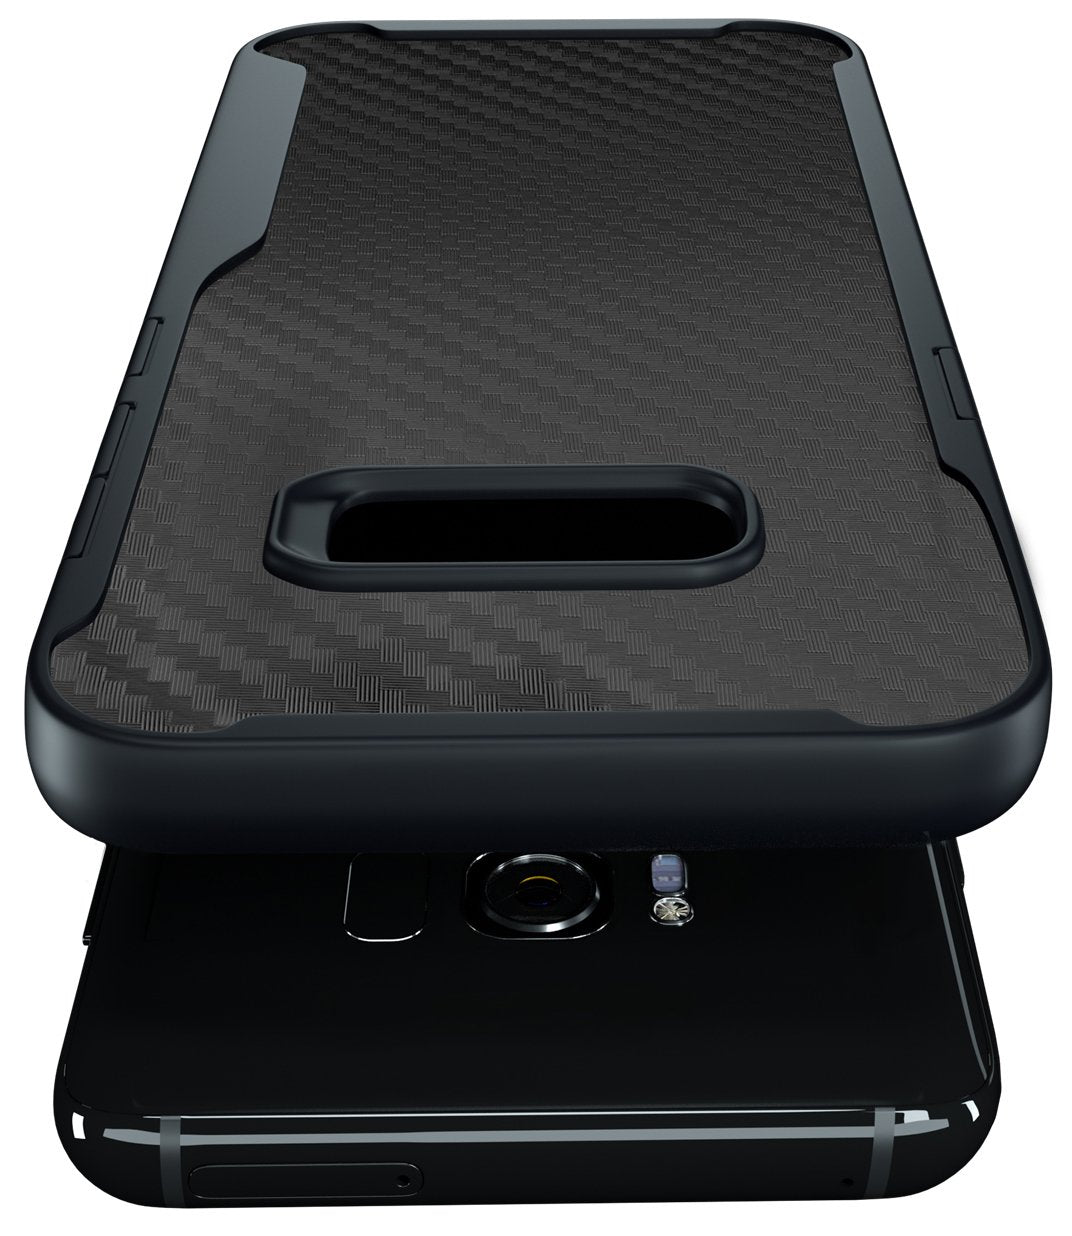 Samsung Galaxy S8 Kitoo Carbon Fiber Pattern Case Black